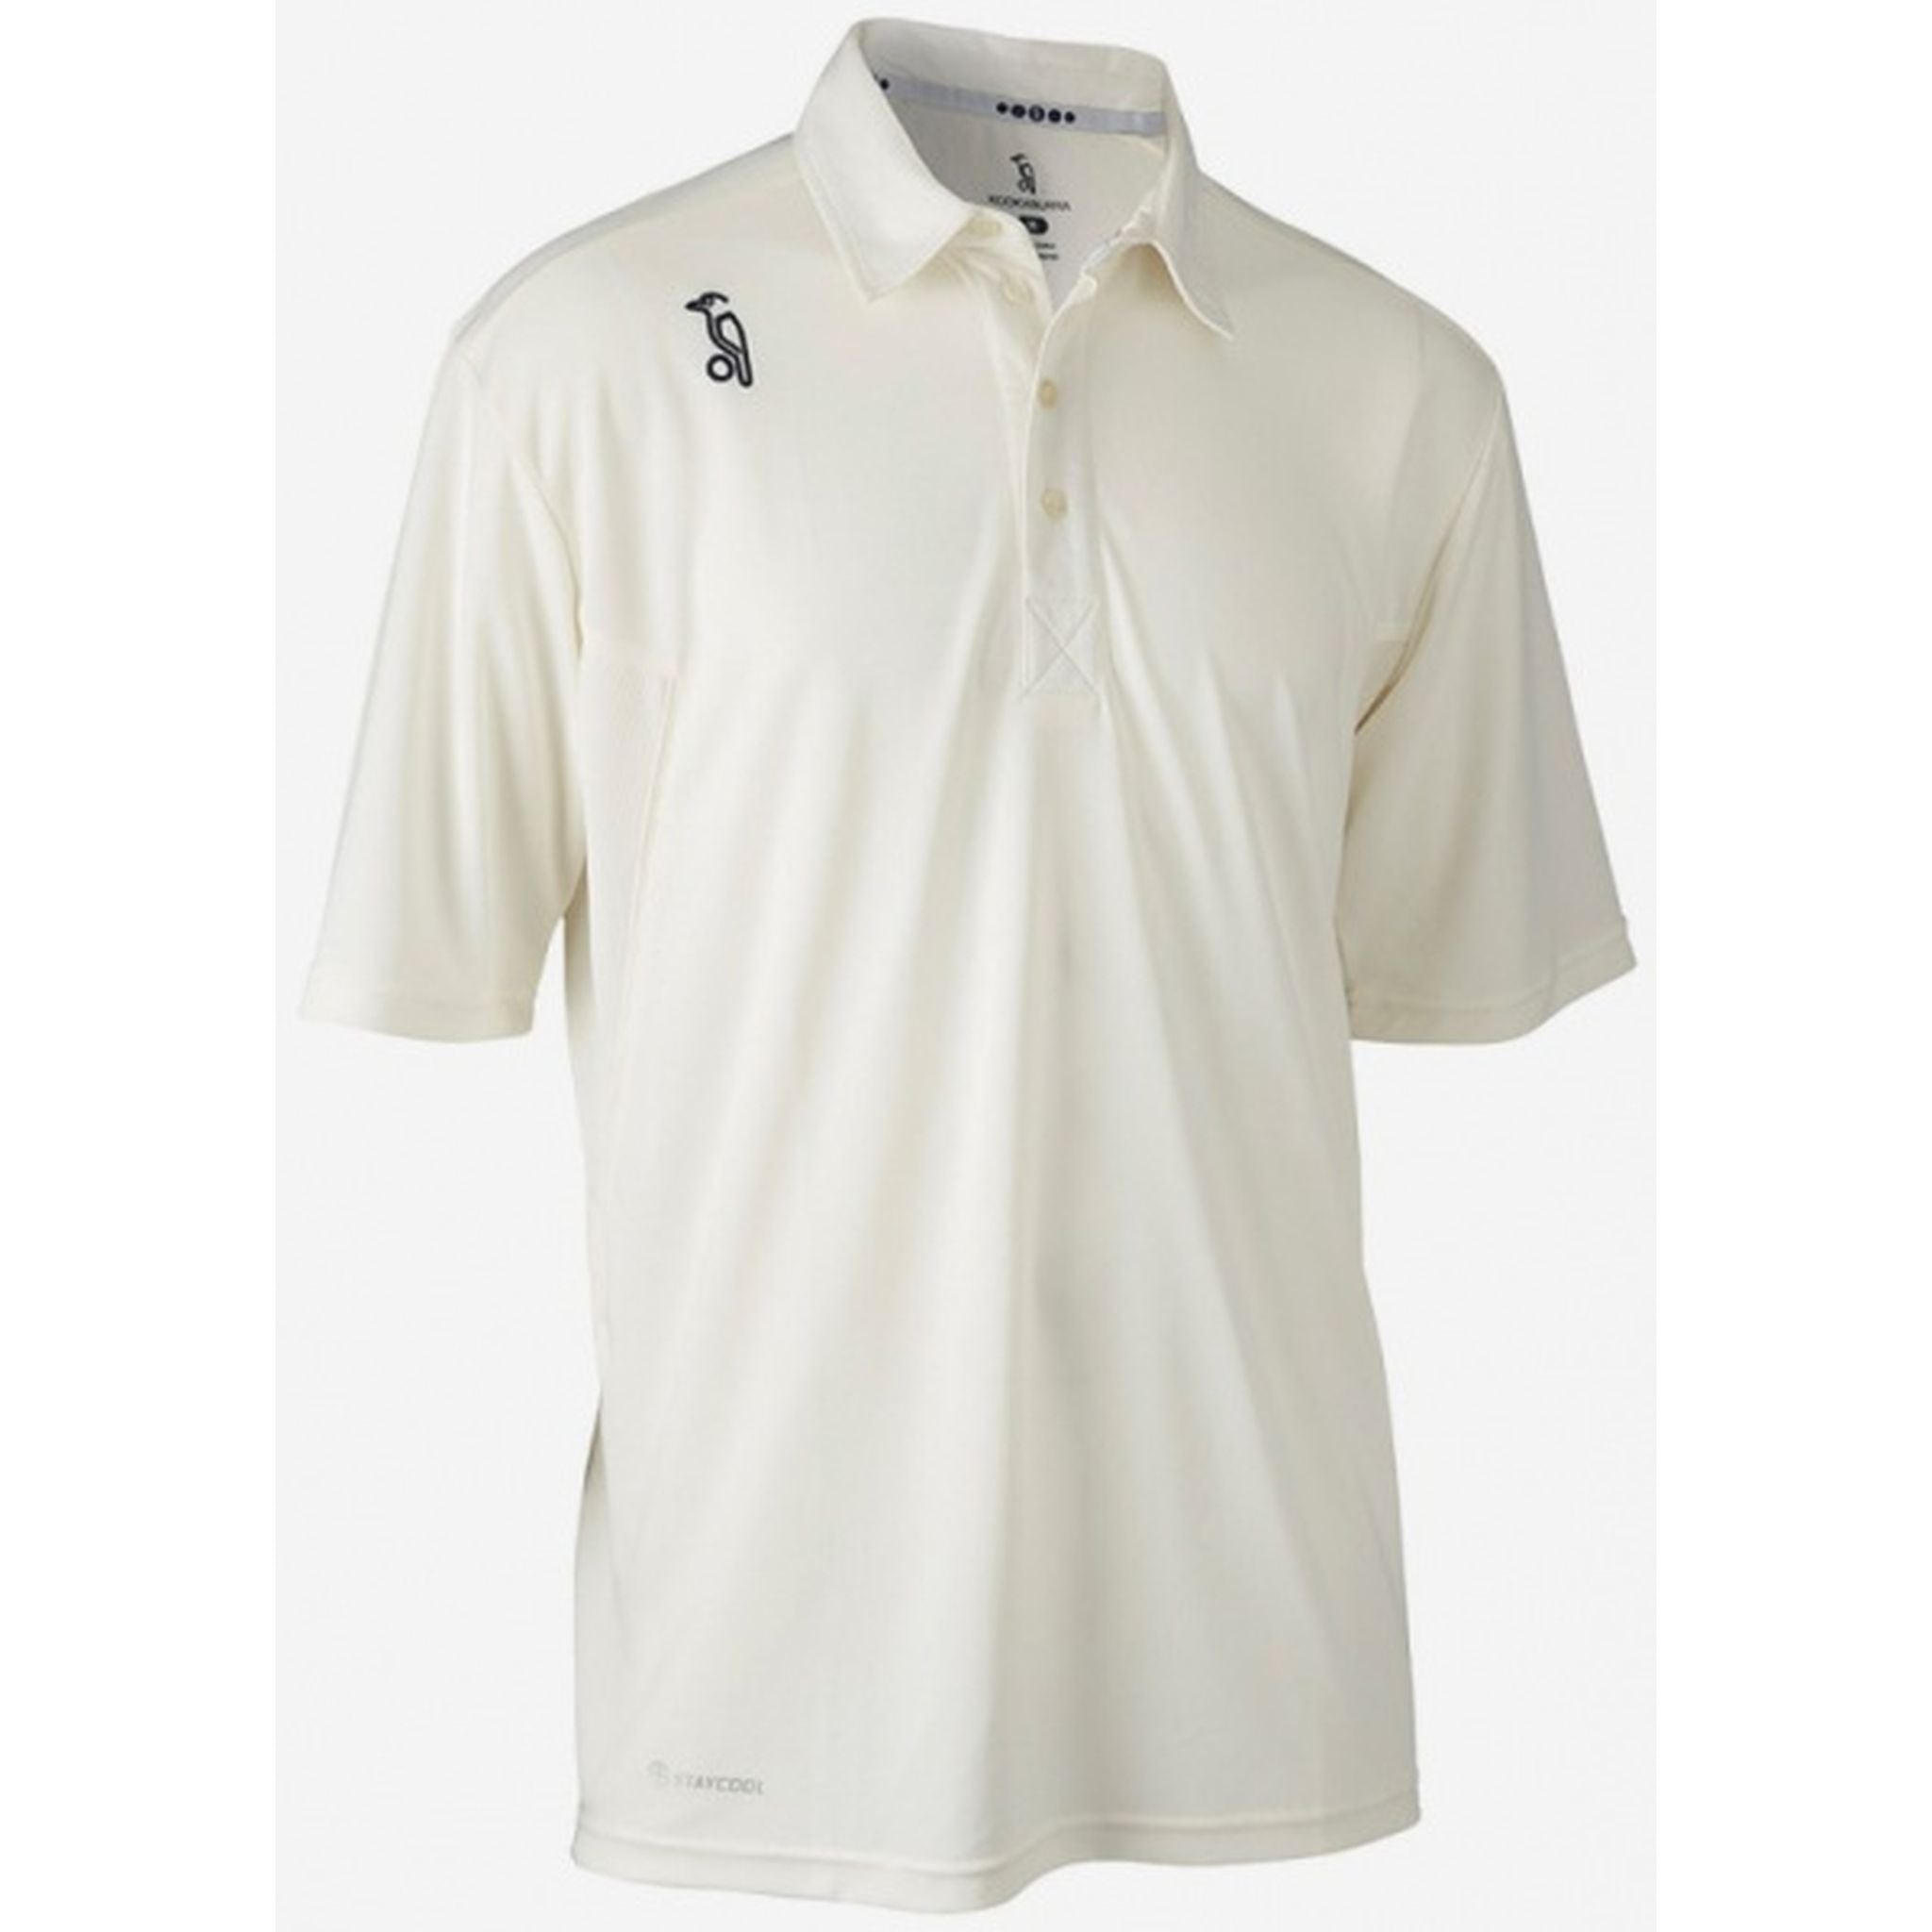 Kookaburra PRO Active Short Sleeve Cricket Shirt